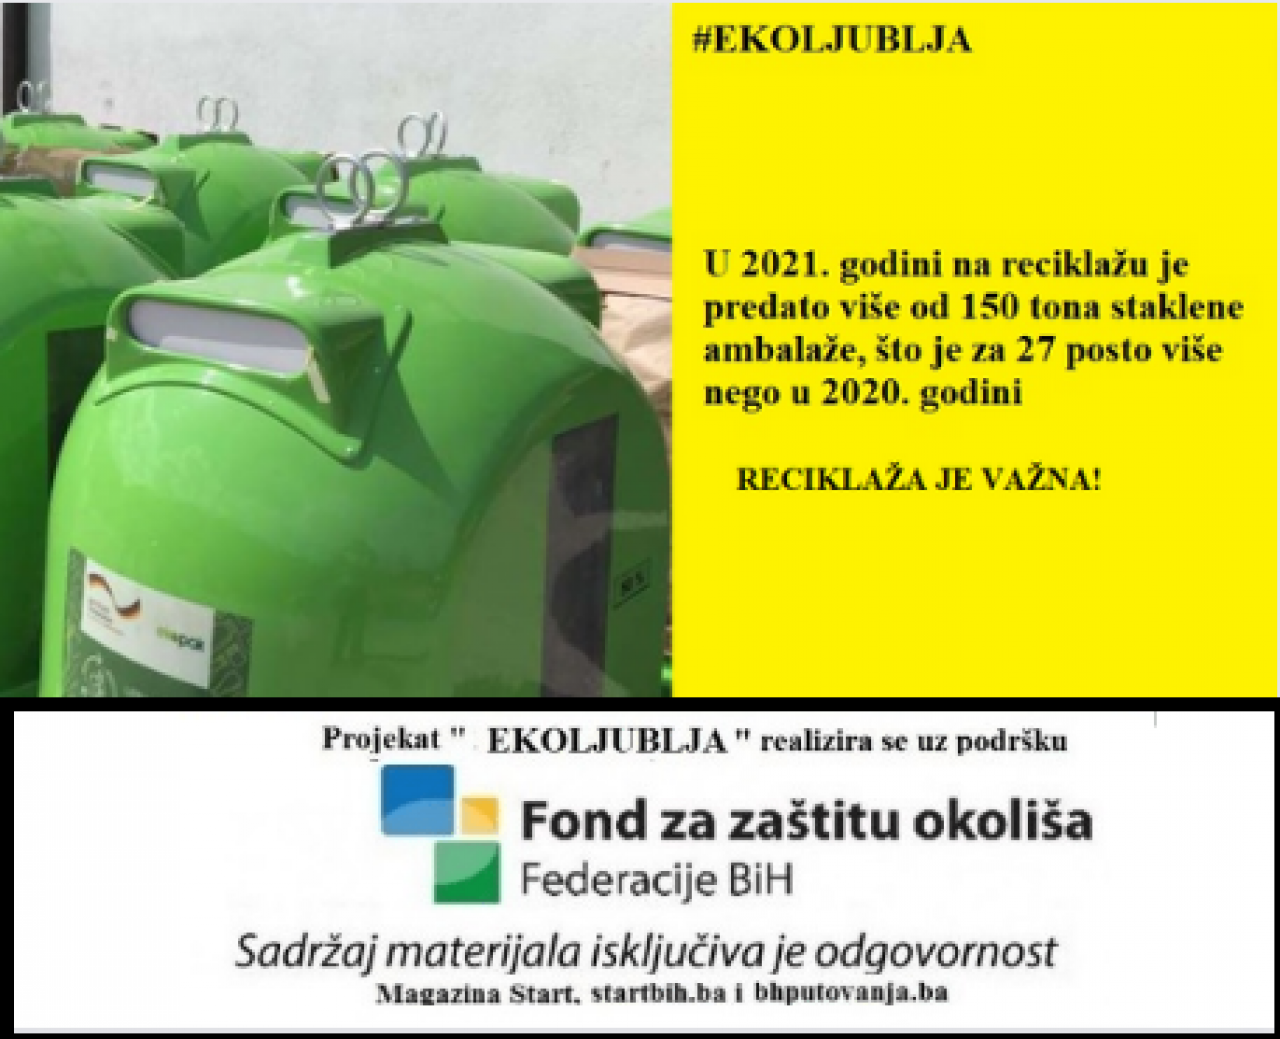 fotoporuka-ekoljublja-3-reciklaza.png